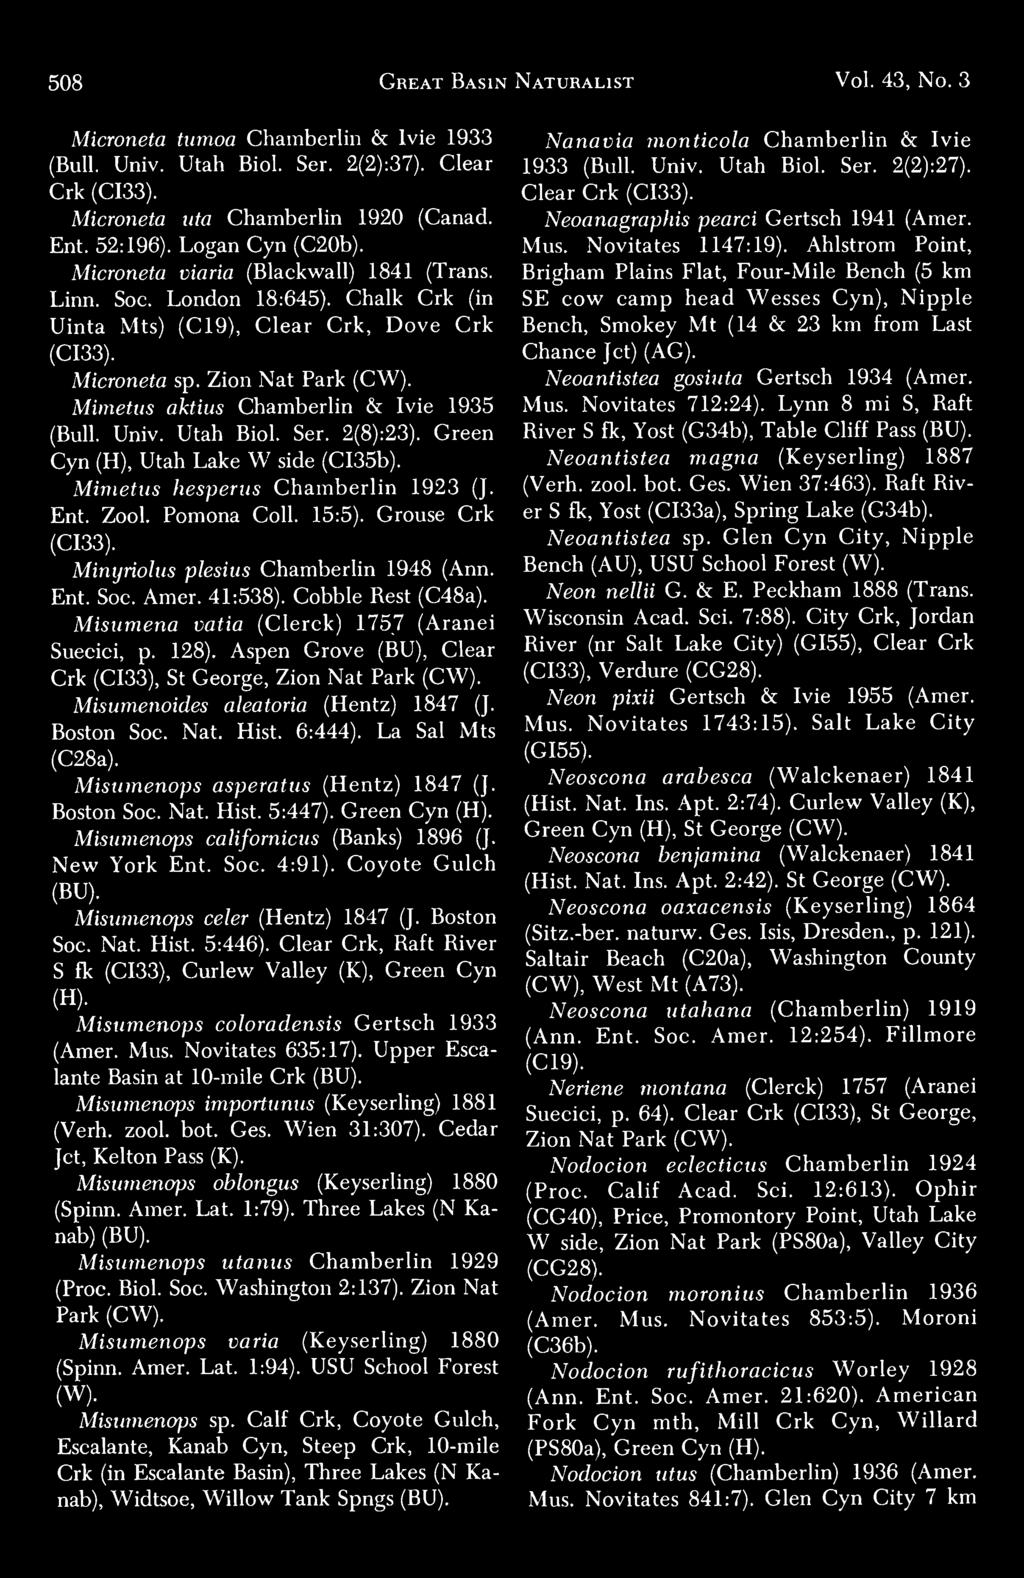 Minietus aktius Chamberlin & Ivie 1935 (Bull. Univ. Utah Biol. Ser. 2(8) :23). Green Cyn (H), Utah Lake W side (CI35b). Mimetus hesperus Chamberlin 1923 (J. Ent. Zool. Pomona Coll. 15:5).